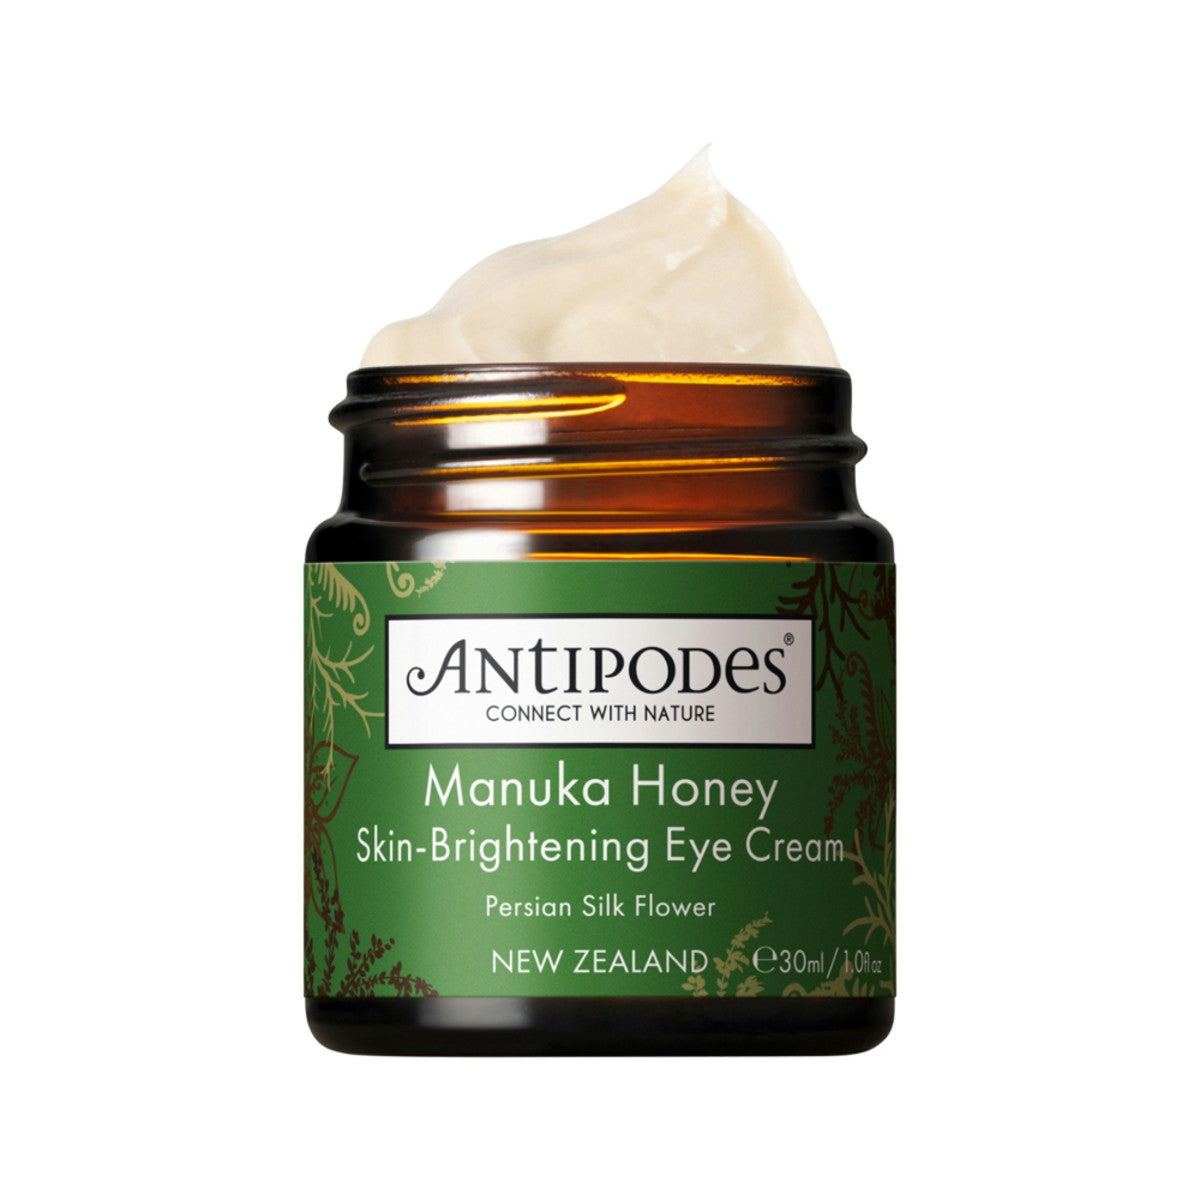 image of Antipodes Manuka Honey Skin-Brightening Eye Cream 30ml on white background 